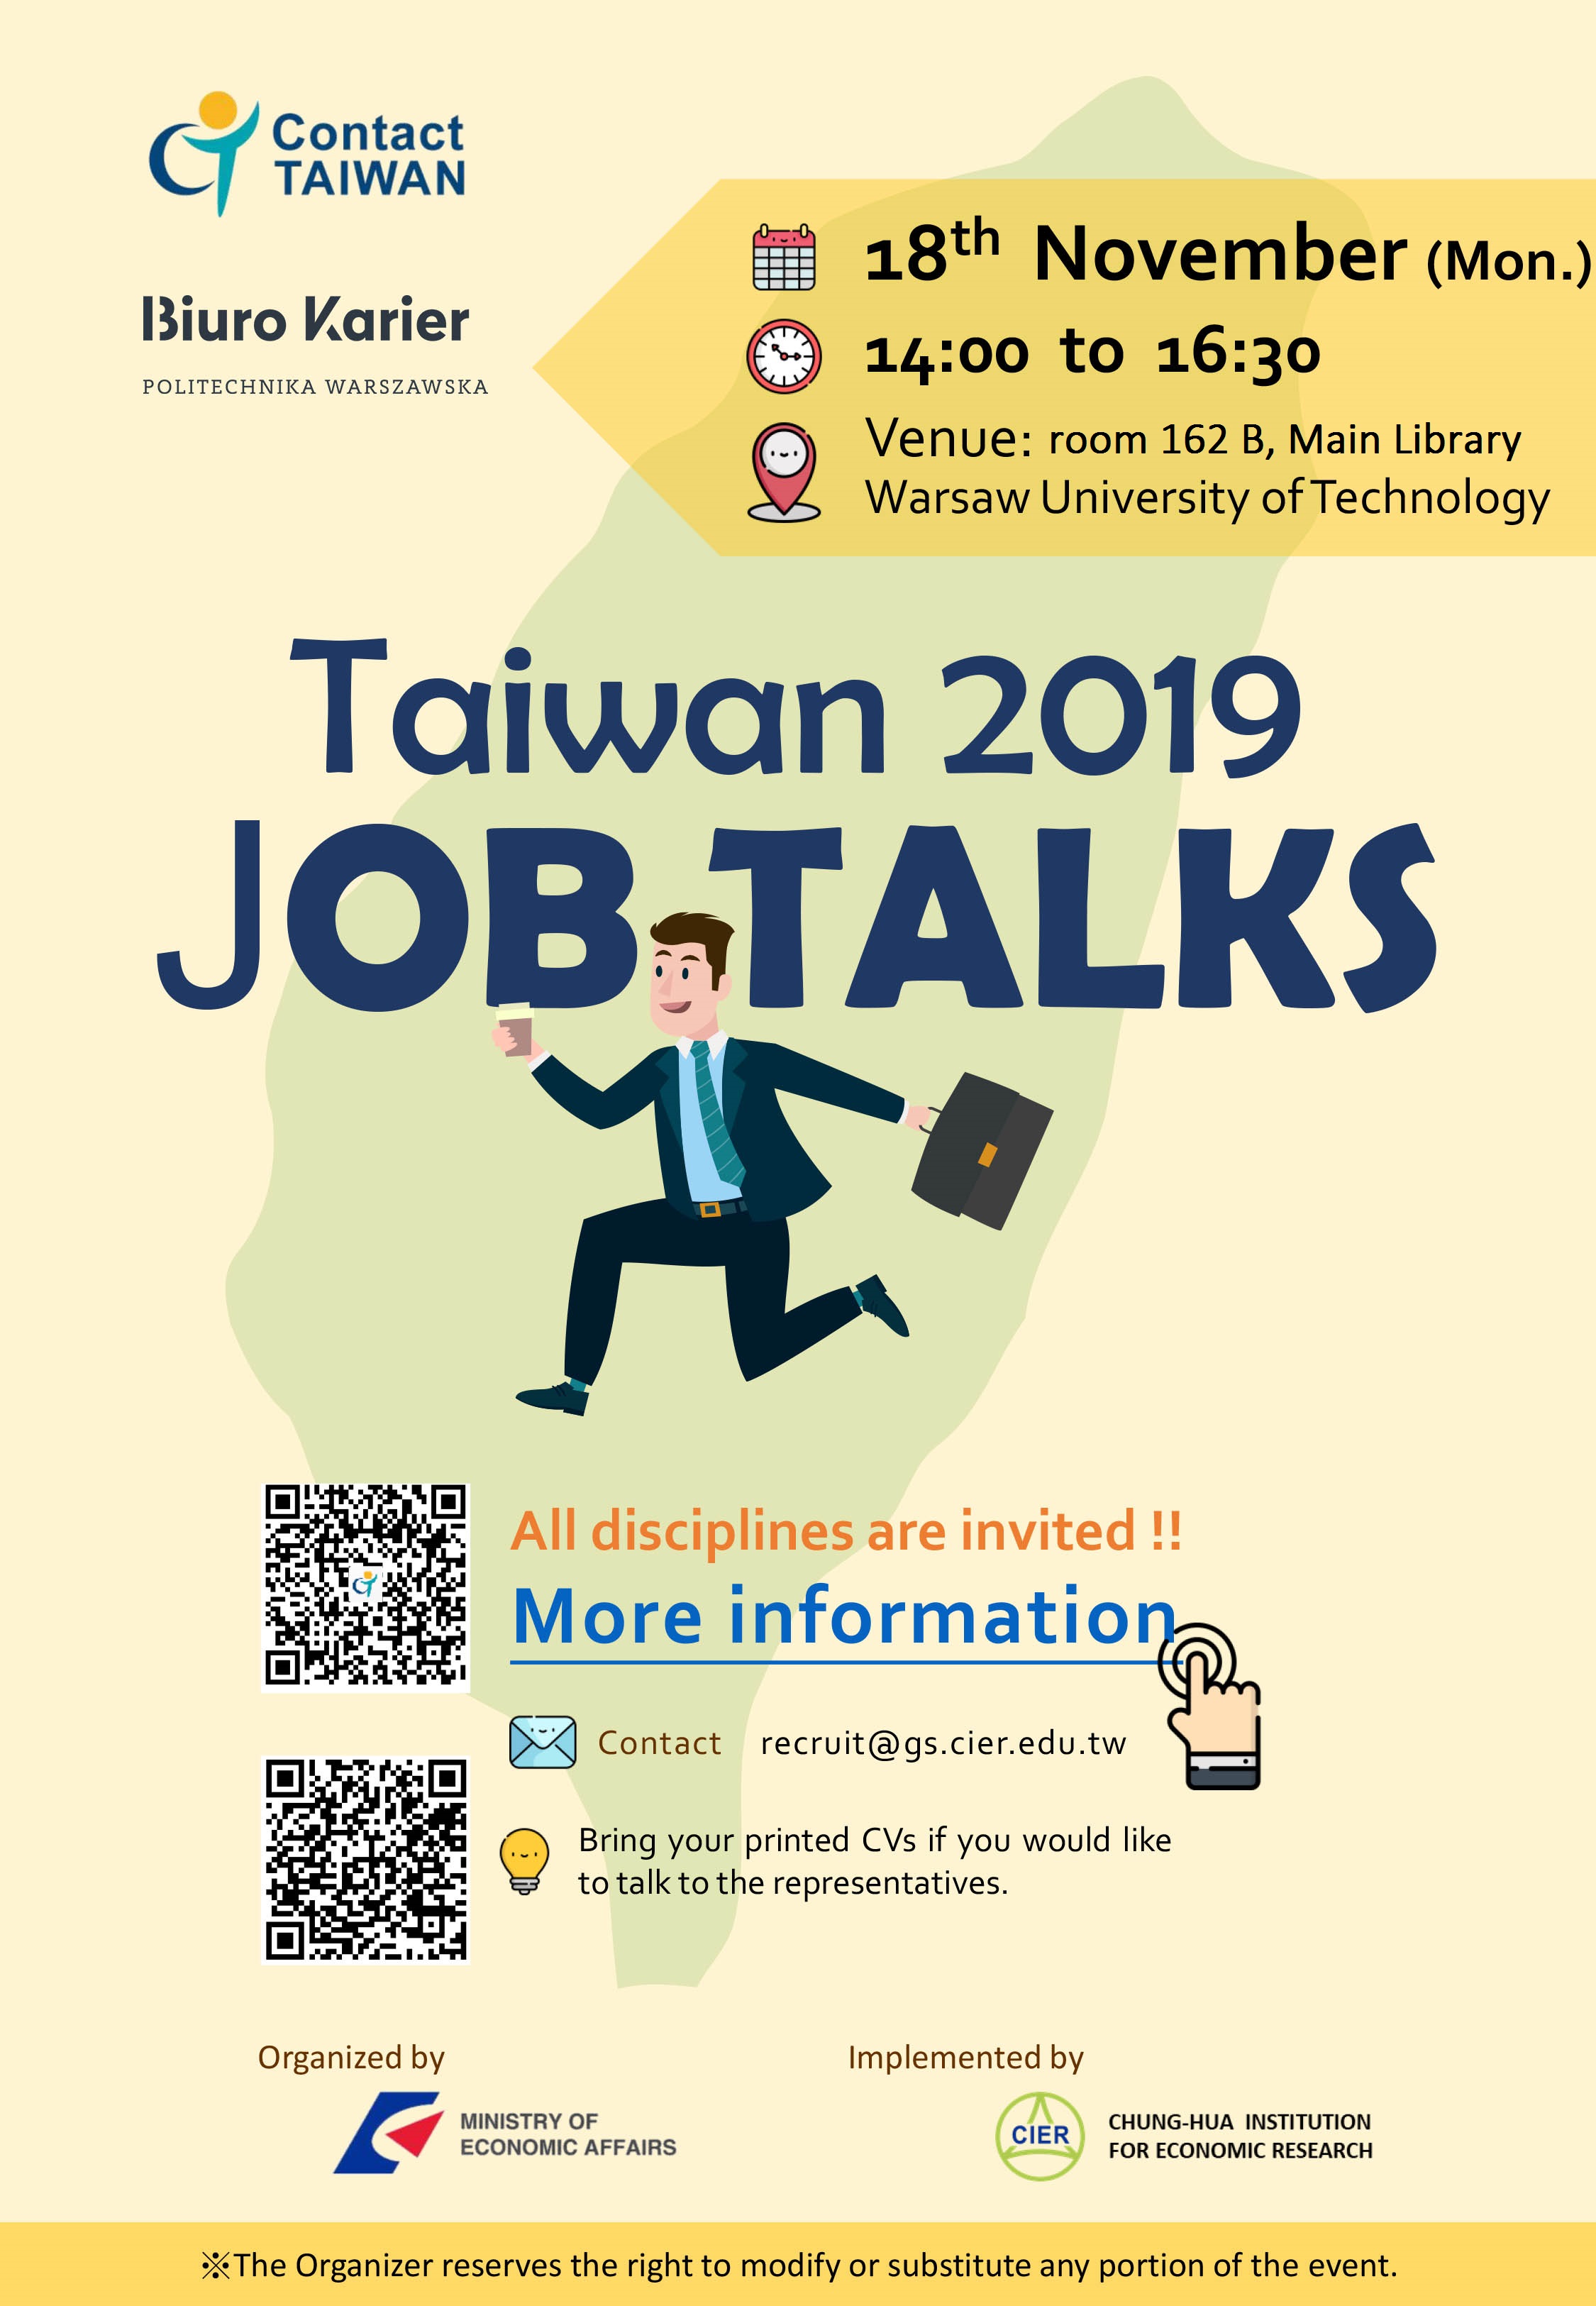 Taiwan Job Talks - event for Polish and international students 